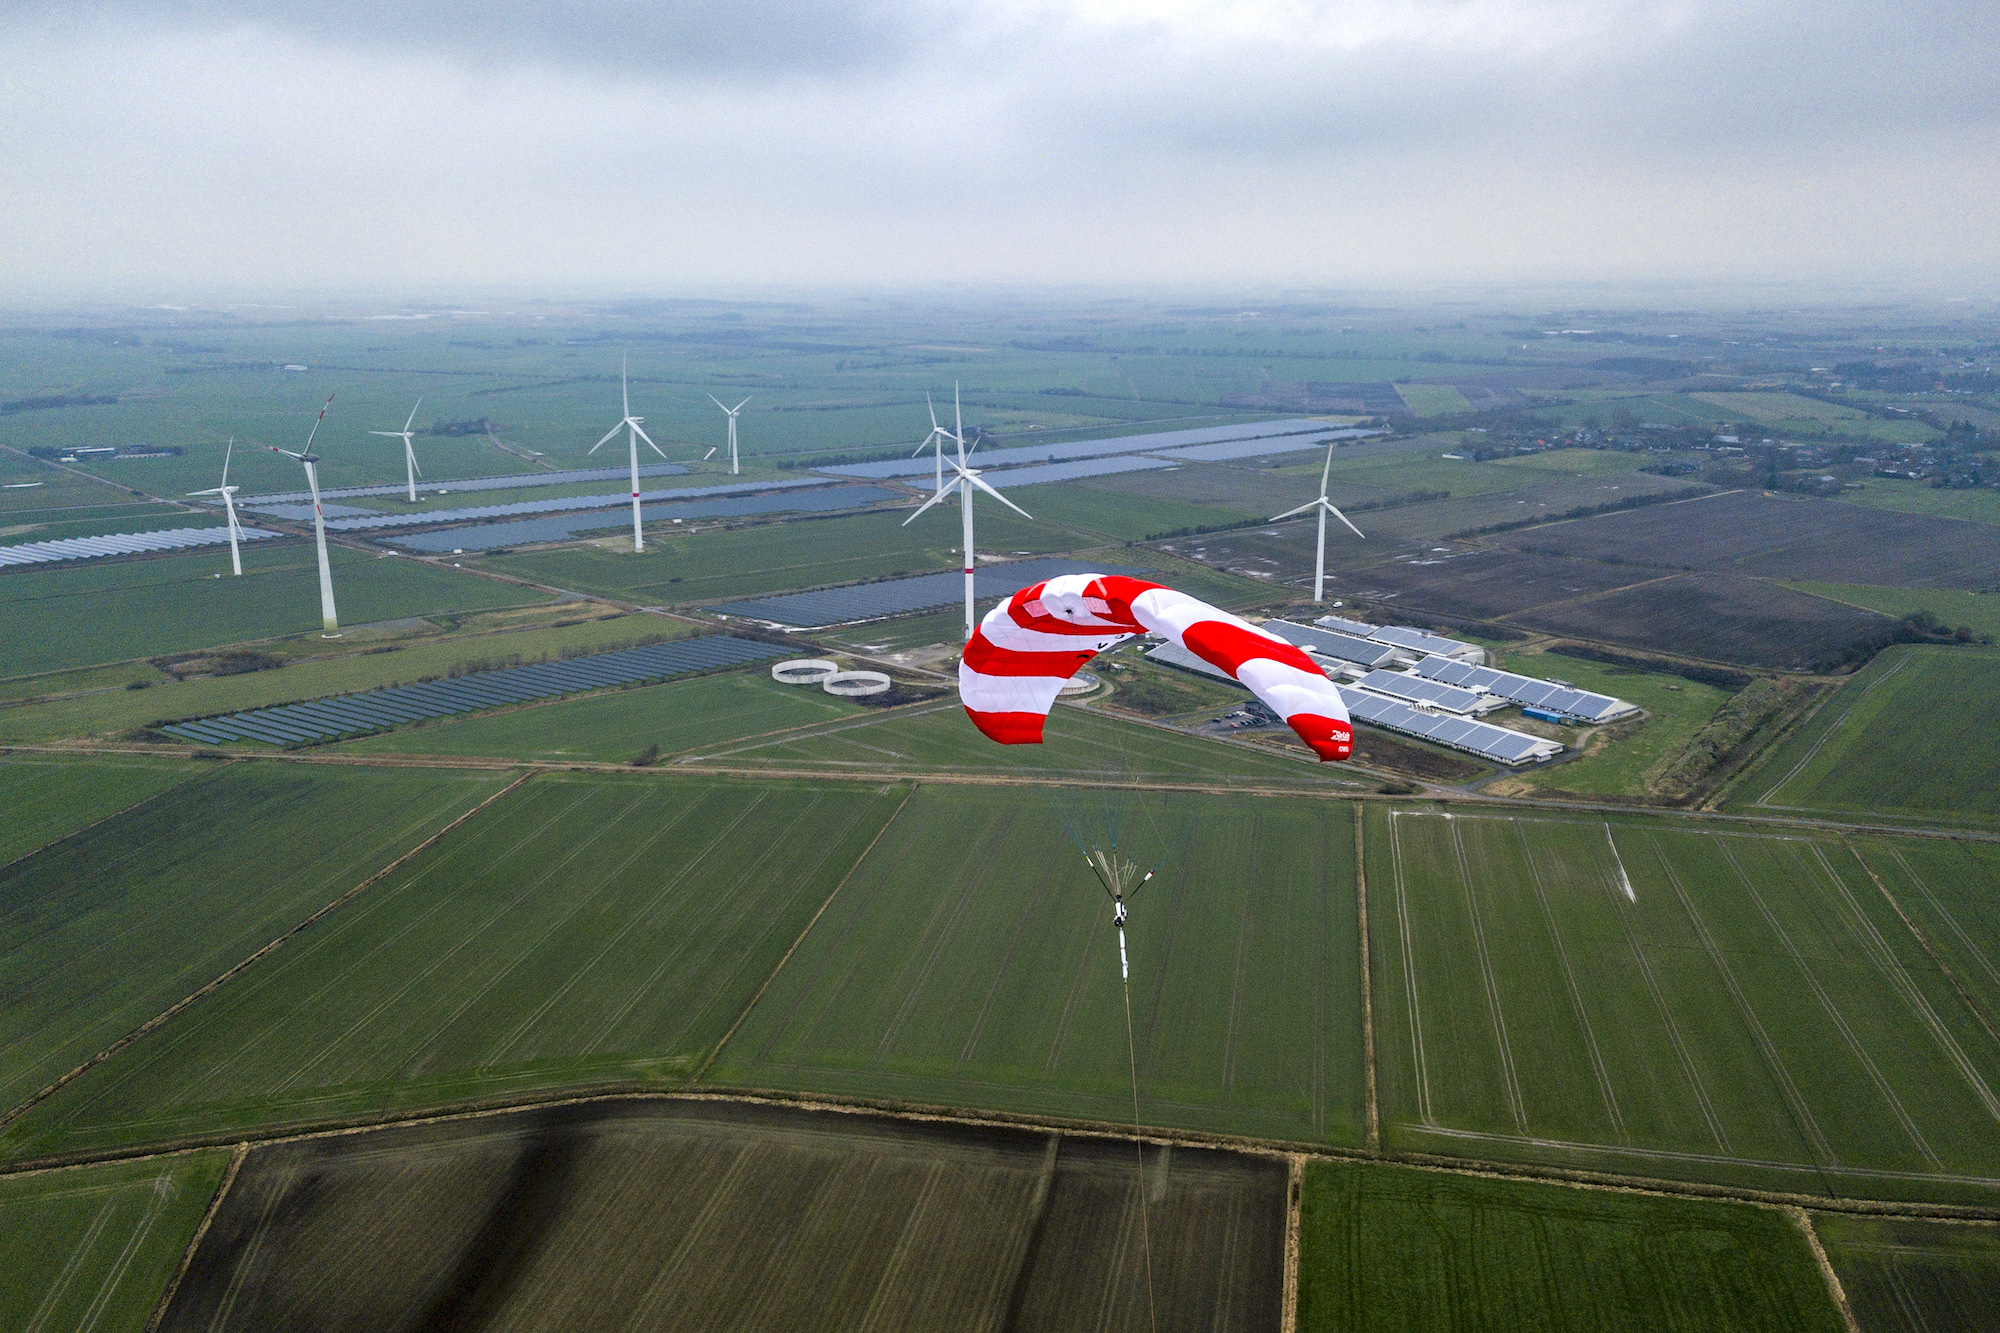 Could this new wind turbine design revolutionize renewable energy?